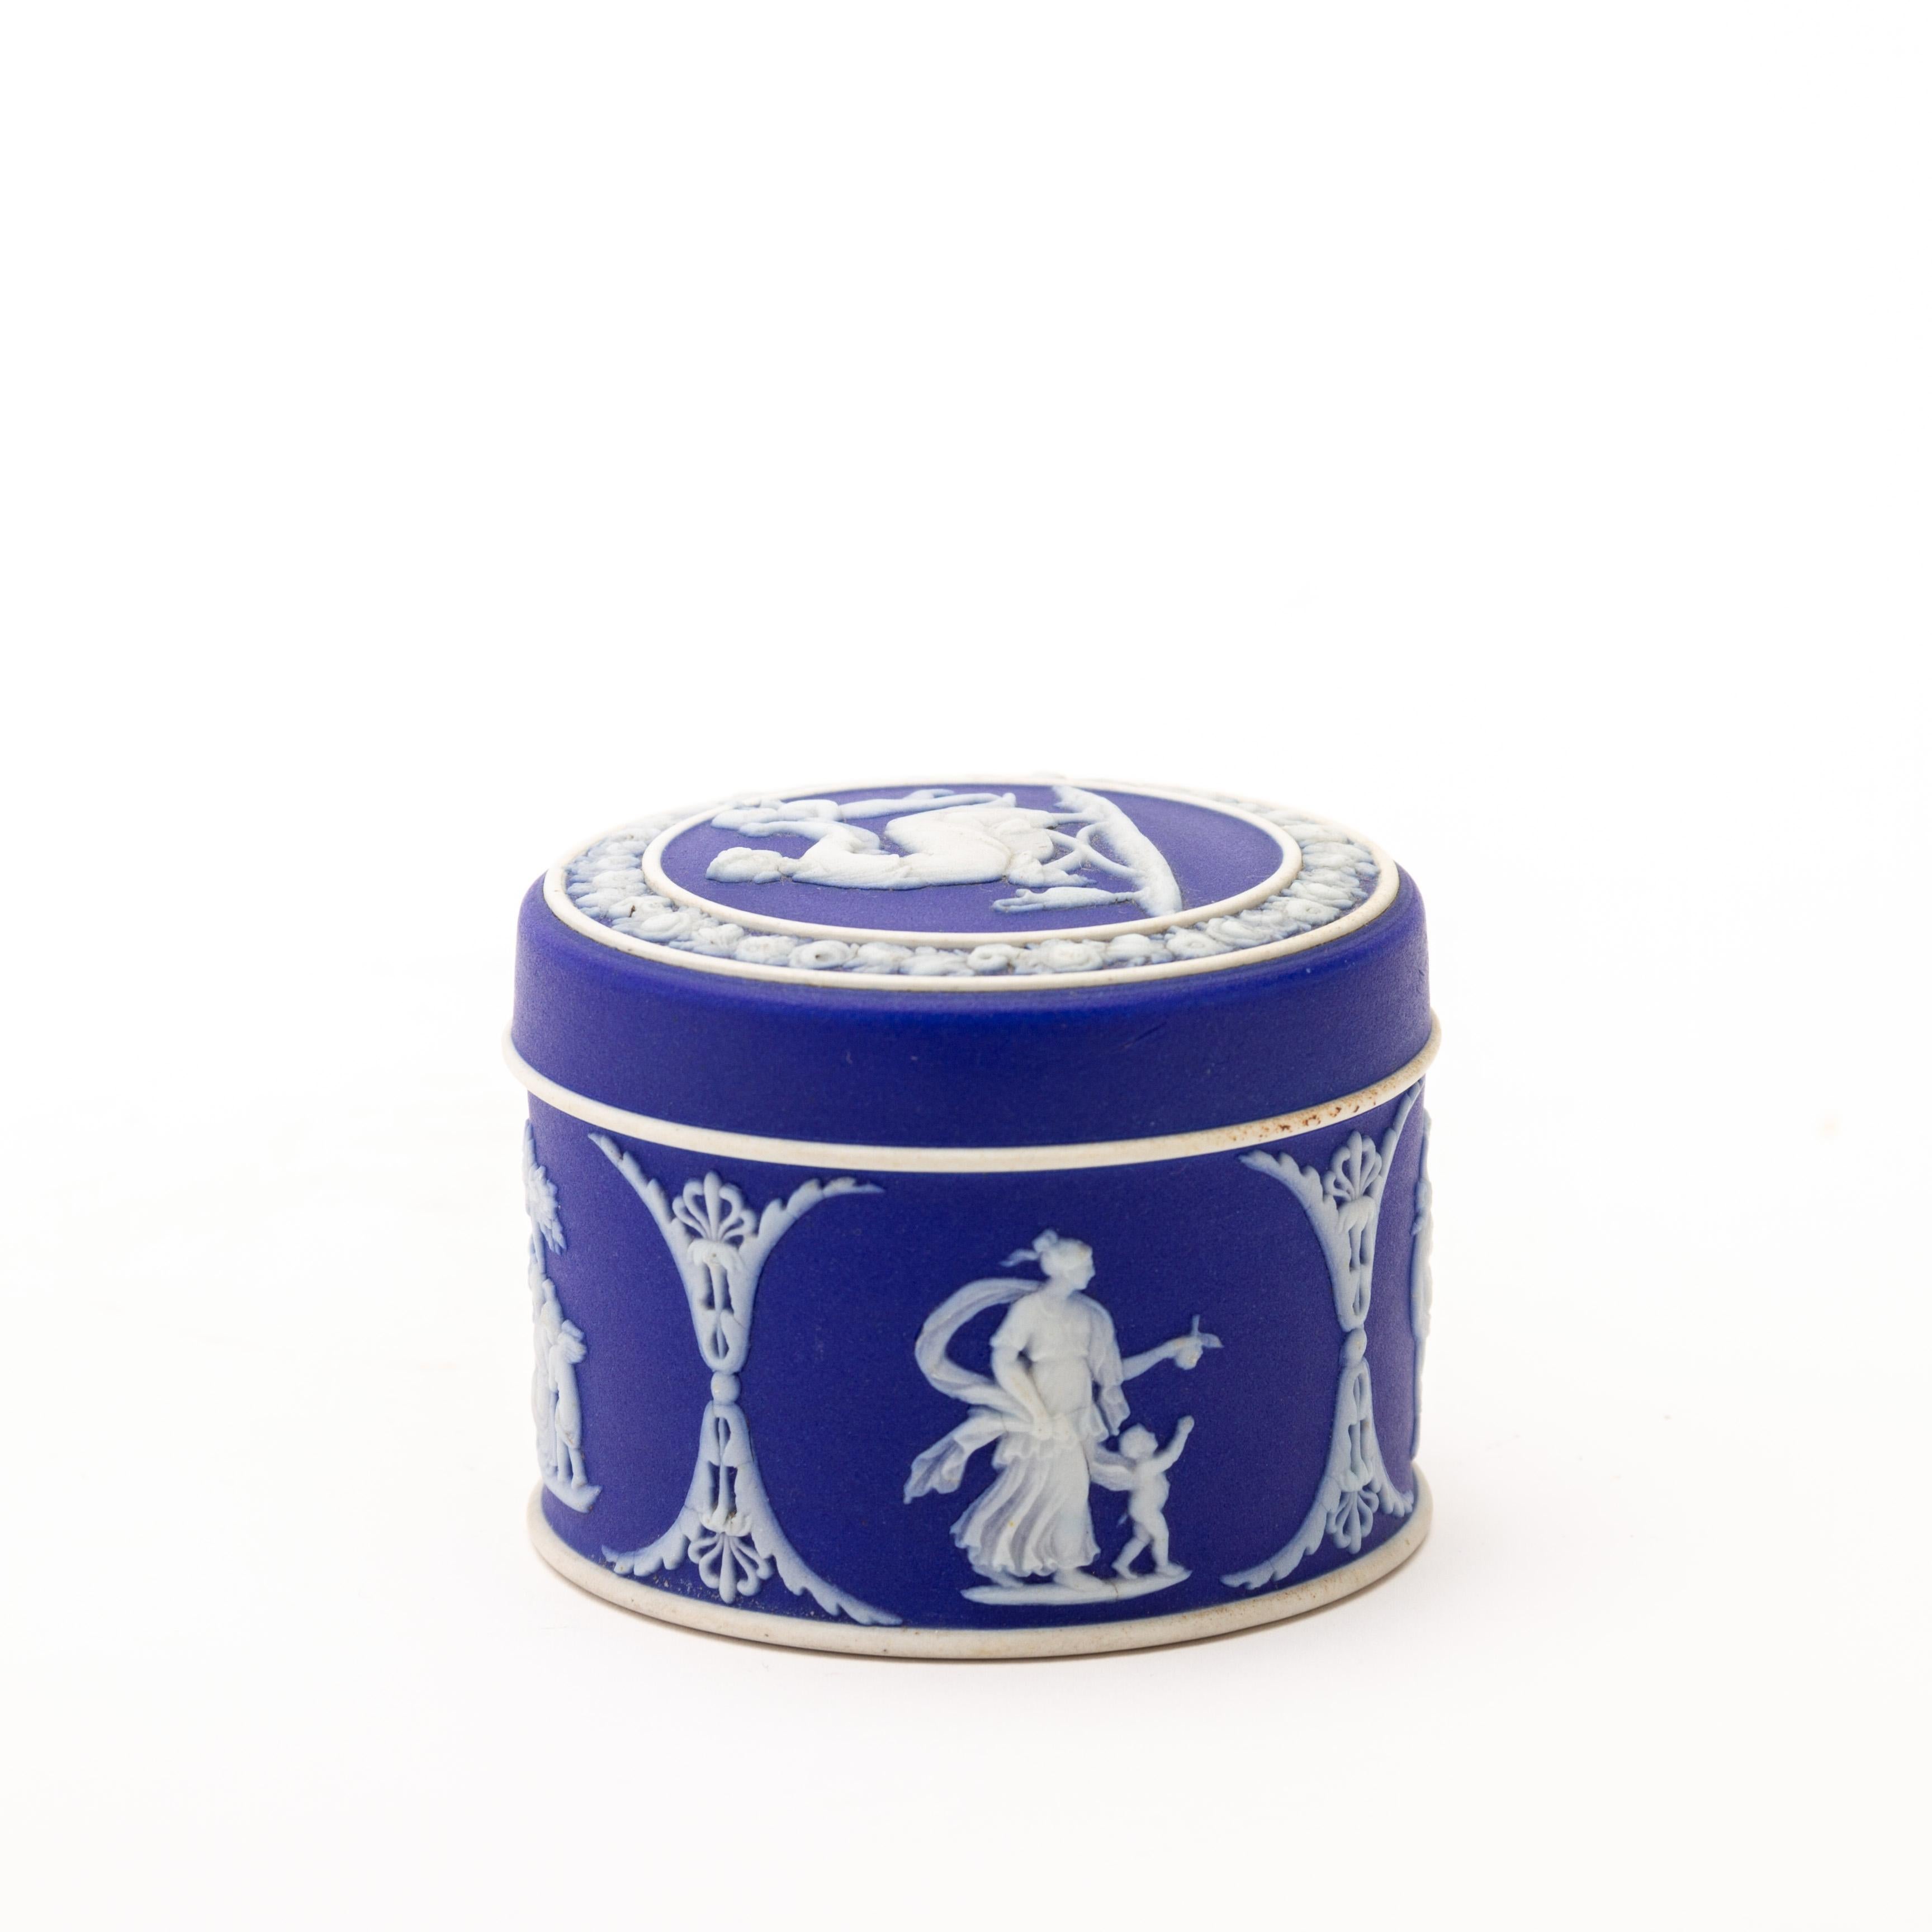 Wedgwood Portland Blue Neoclassical Lidded Cameo Trinket Box 
Good condition
Free international shipping.